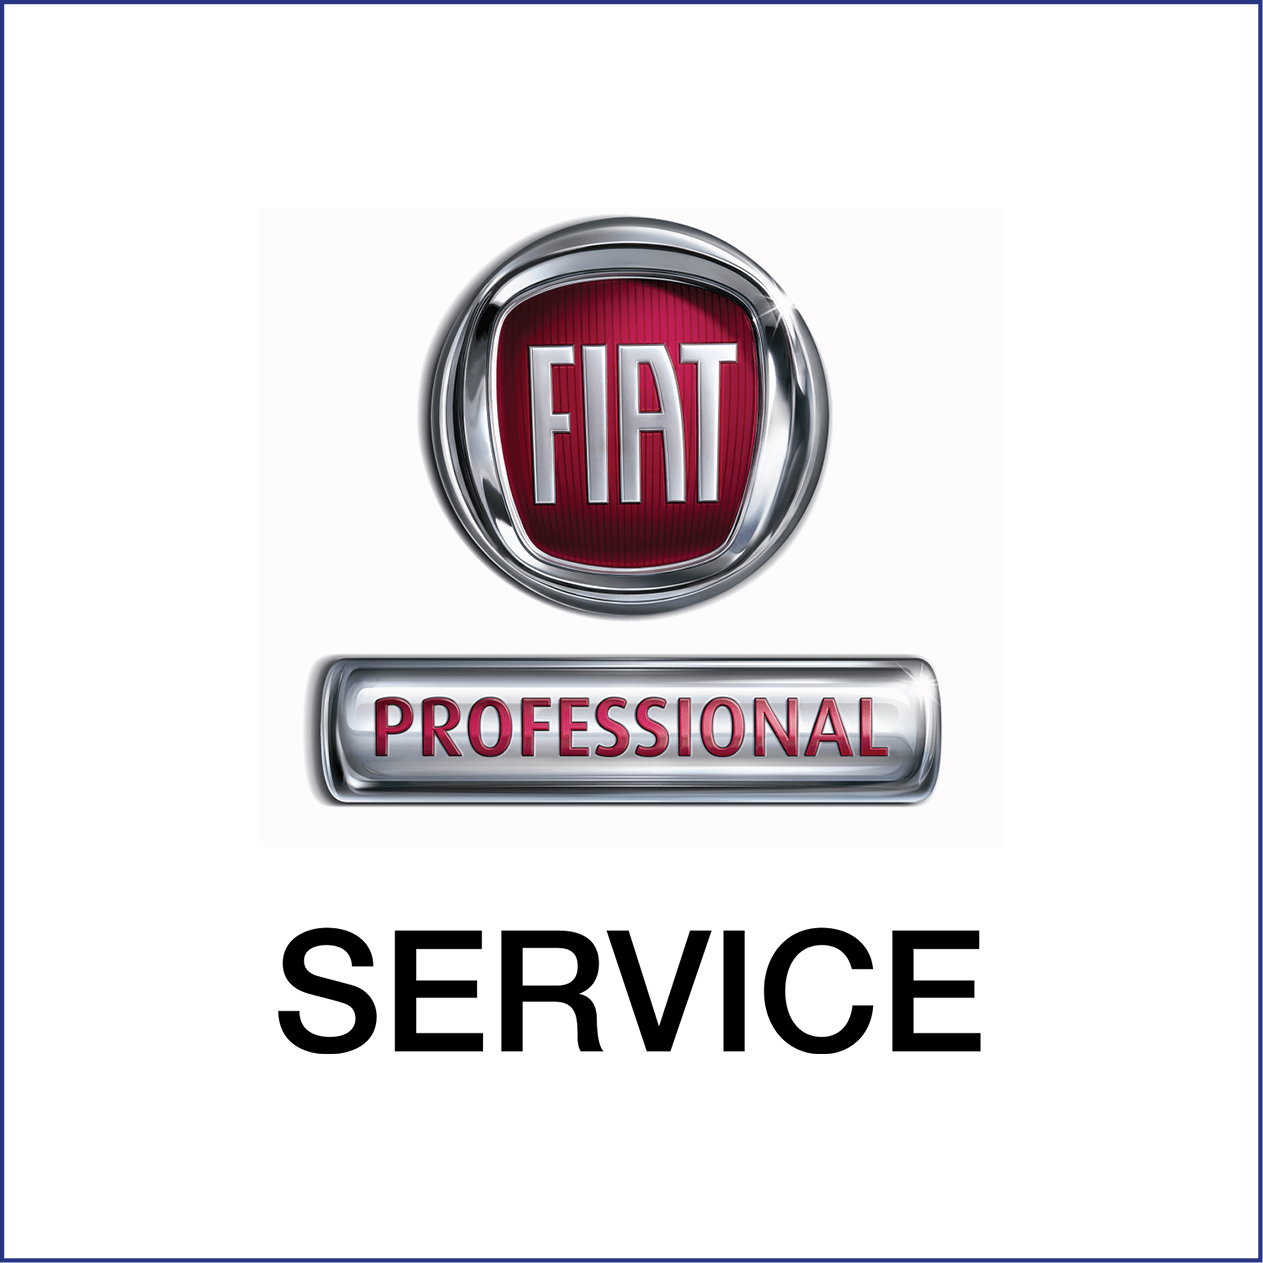 FIAT Professional Service